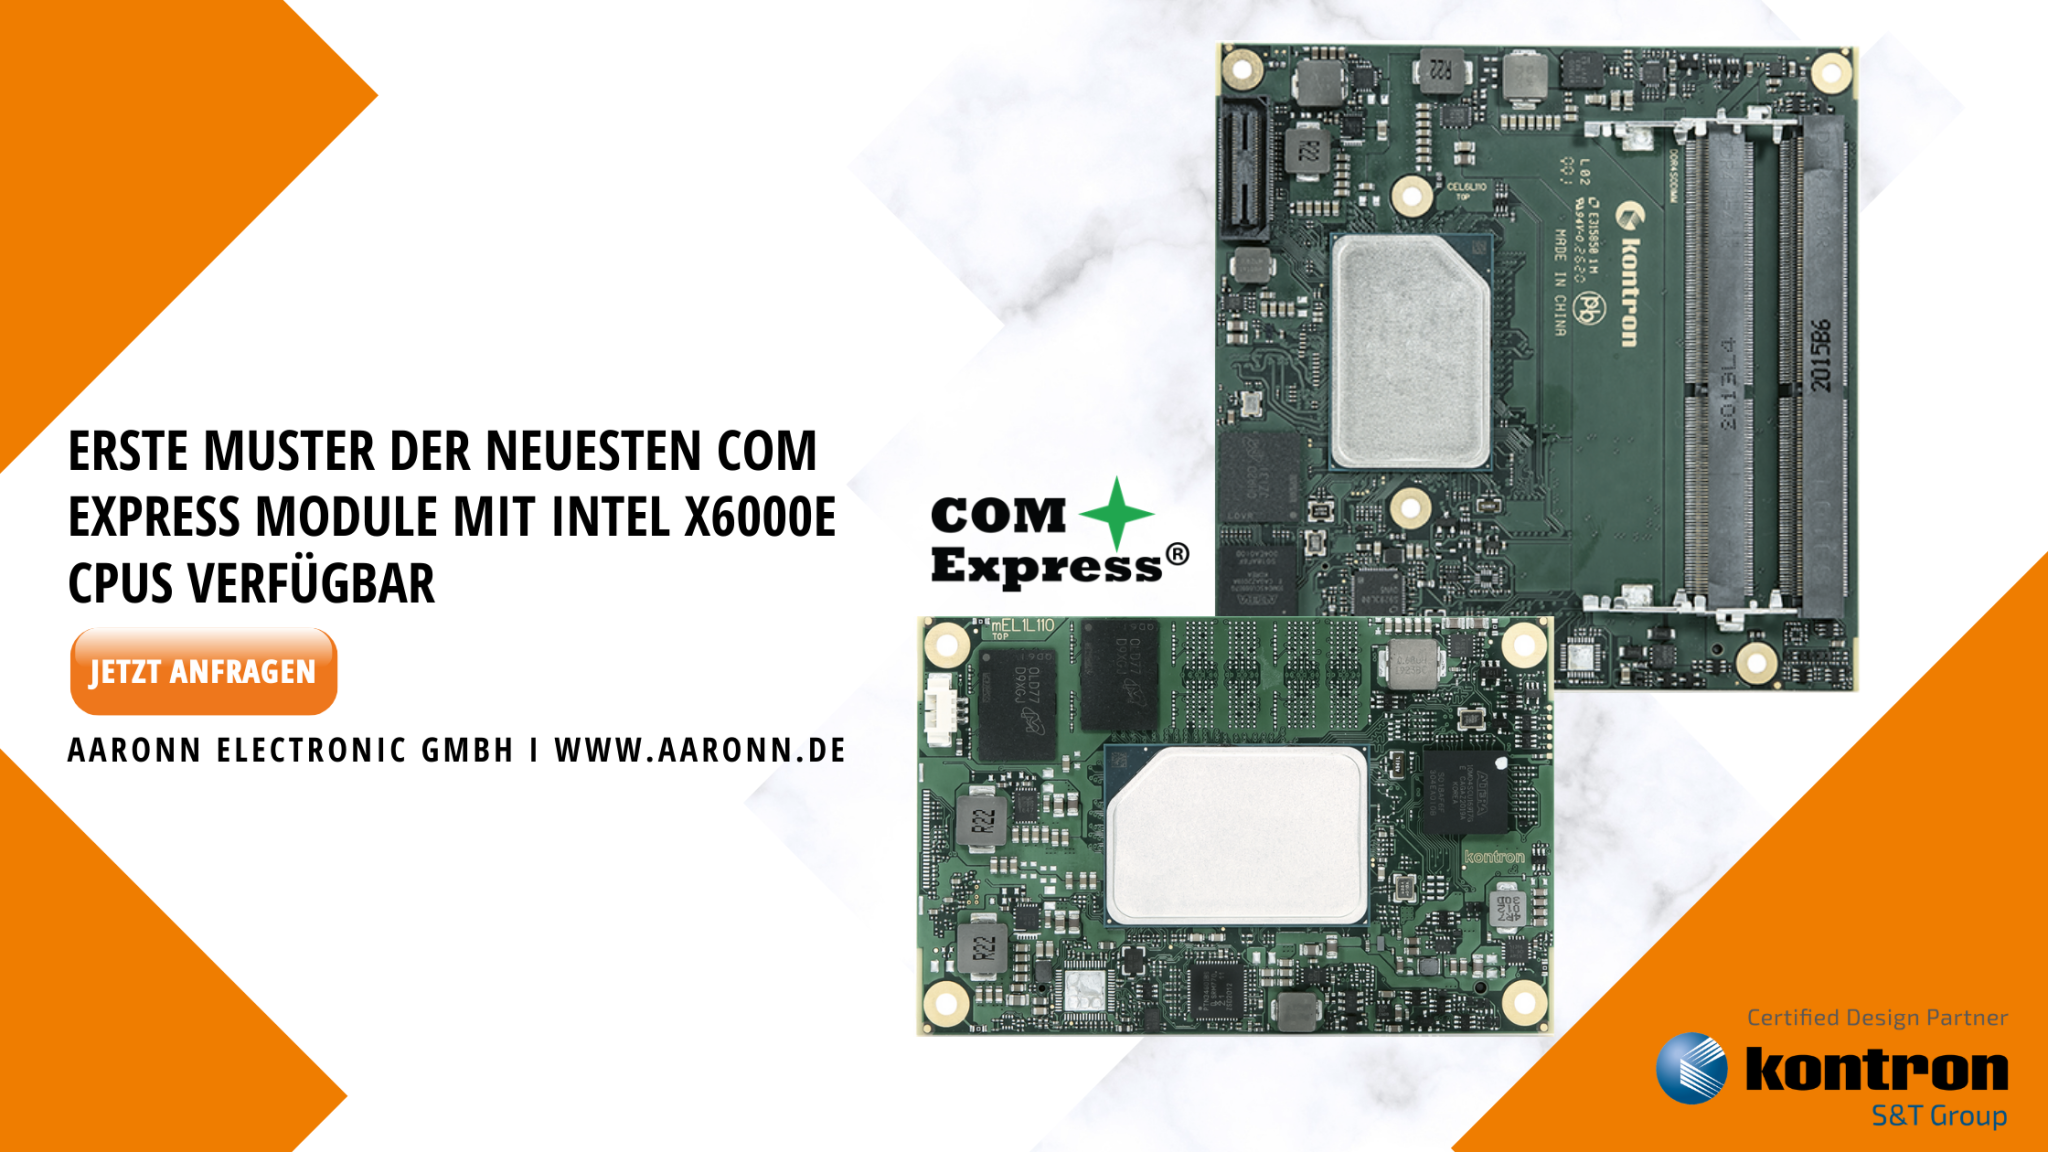 ERSTE Muster DER NEUESTEN COM Express Module mit Intel X6000E cpus VERFÜGBAR